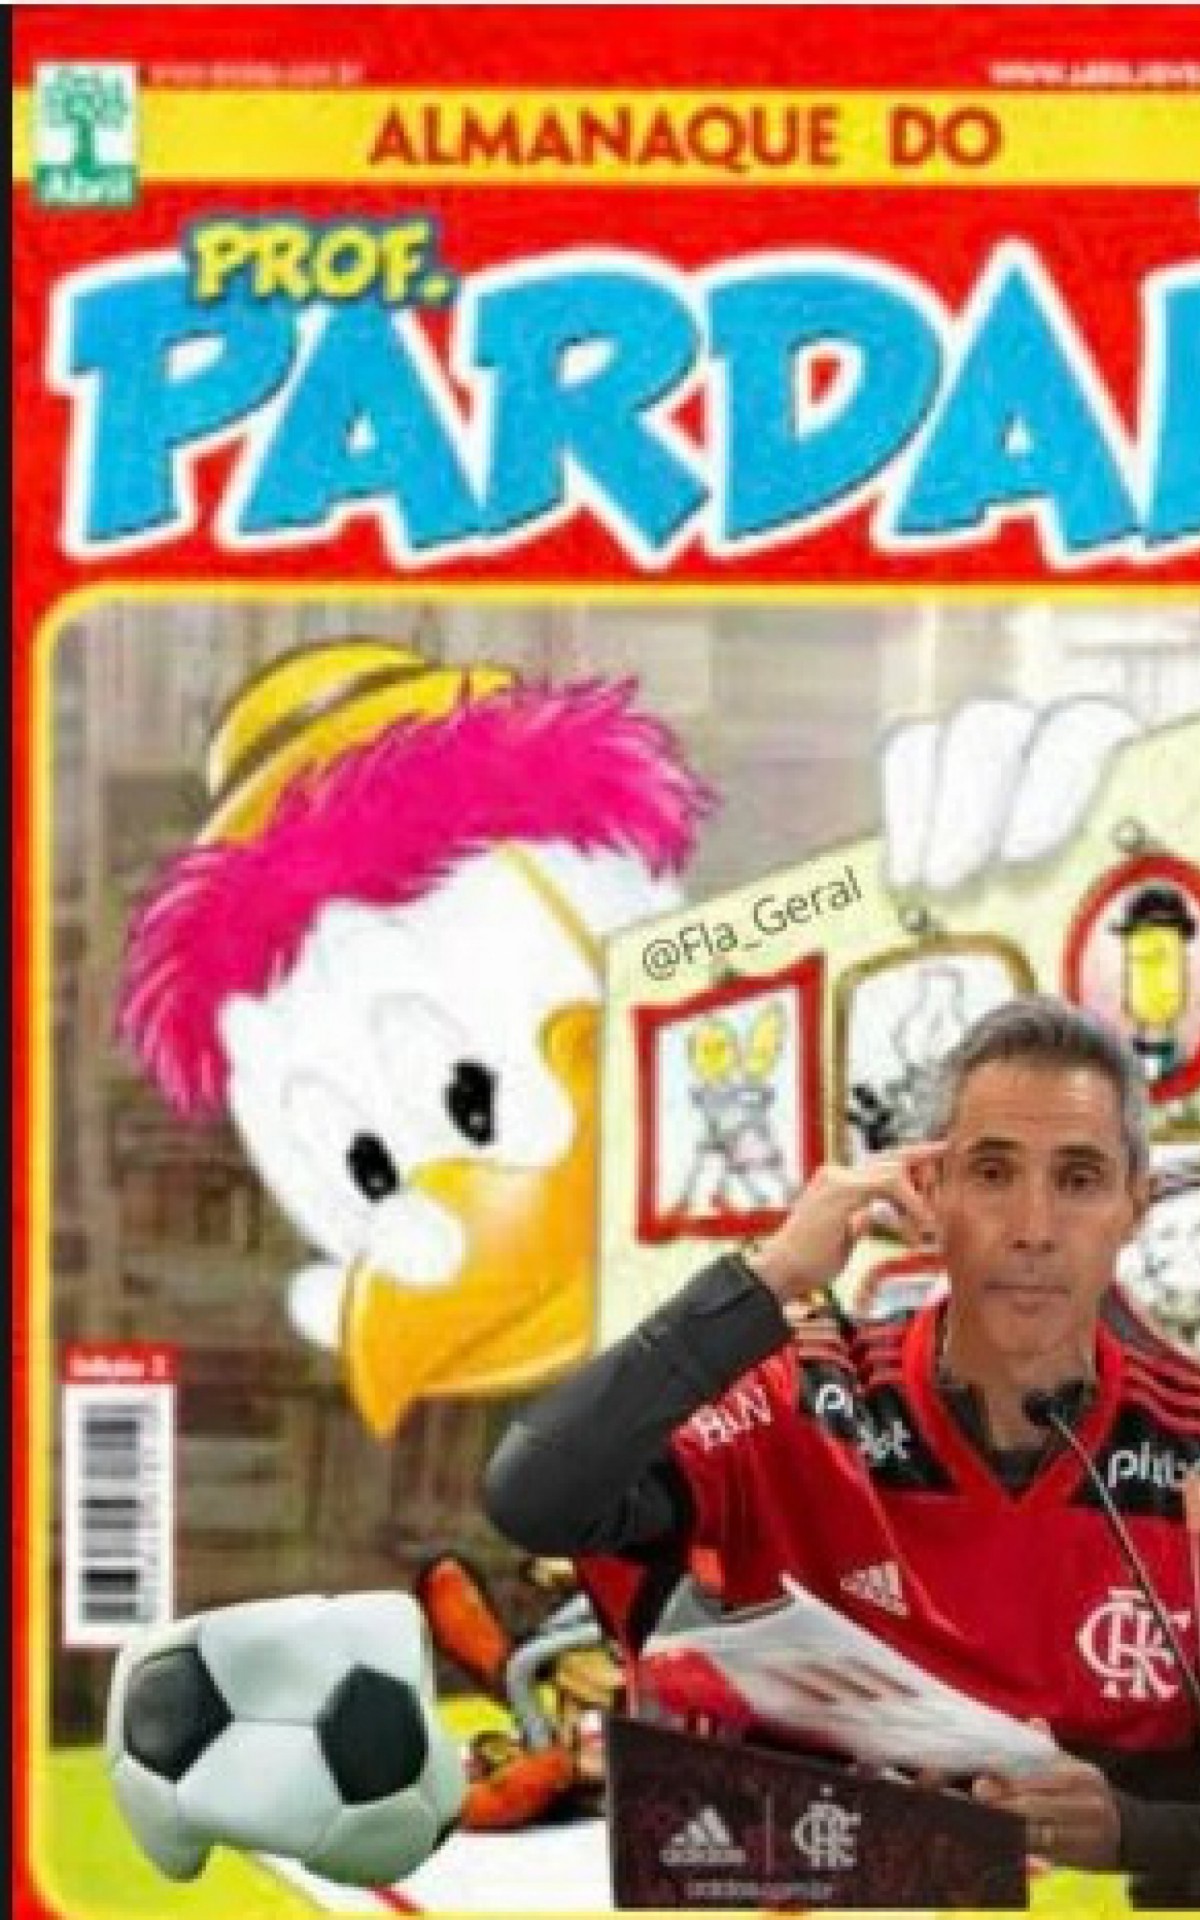 Flamengo vira piada na Web após perder para o Fortaleza